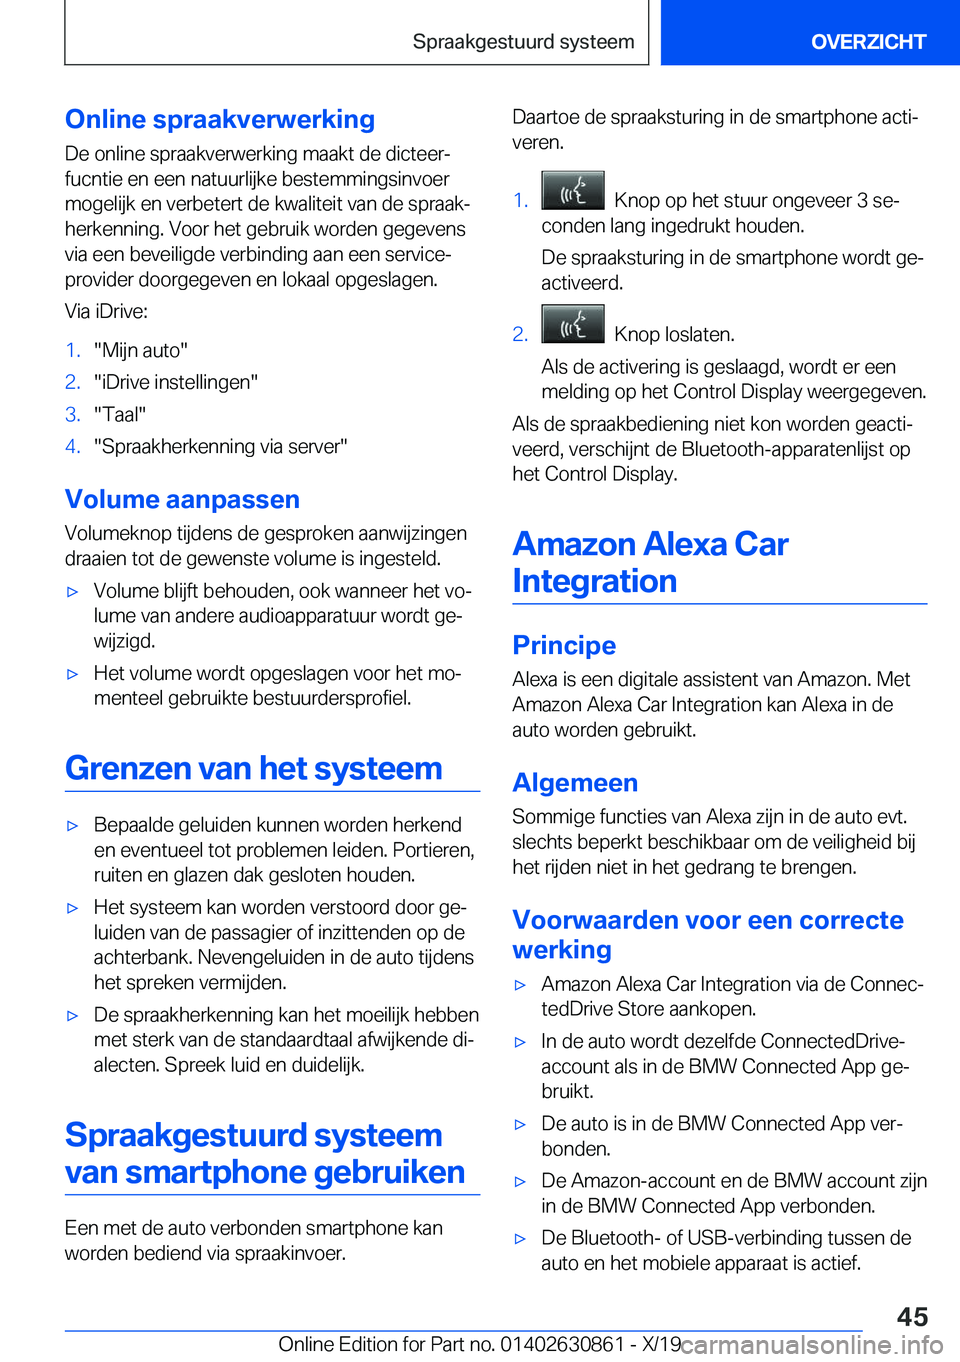 BMW 4 SERIES GRAN COUPE 2020  Instructieboekjes (in Dutch) �O�n�l�i�n�e��s�p�r�a�a�k�v�e�r�w�e�r�k�i�n�g
�D�e��o�n�l�i�n�e��s�p�r�a�a�k�v�e�r�w�e�r�k�i�n�g��m�a�a�k�t��d�e��d�i�c�t�e�e�rj
�f�u�c�n�t�i�e��e�n��e�e�n��n�a�t�u�u�r�l�i�j�k�e��b�e�s�t�e